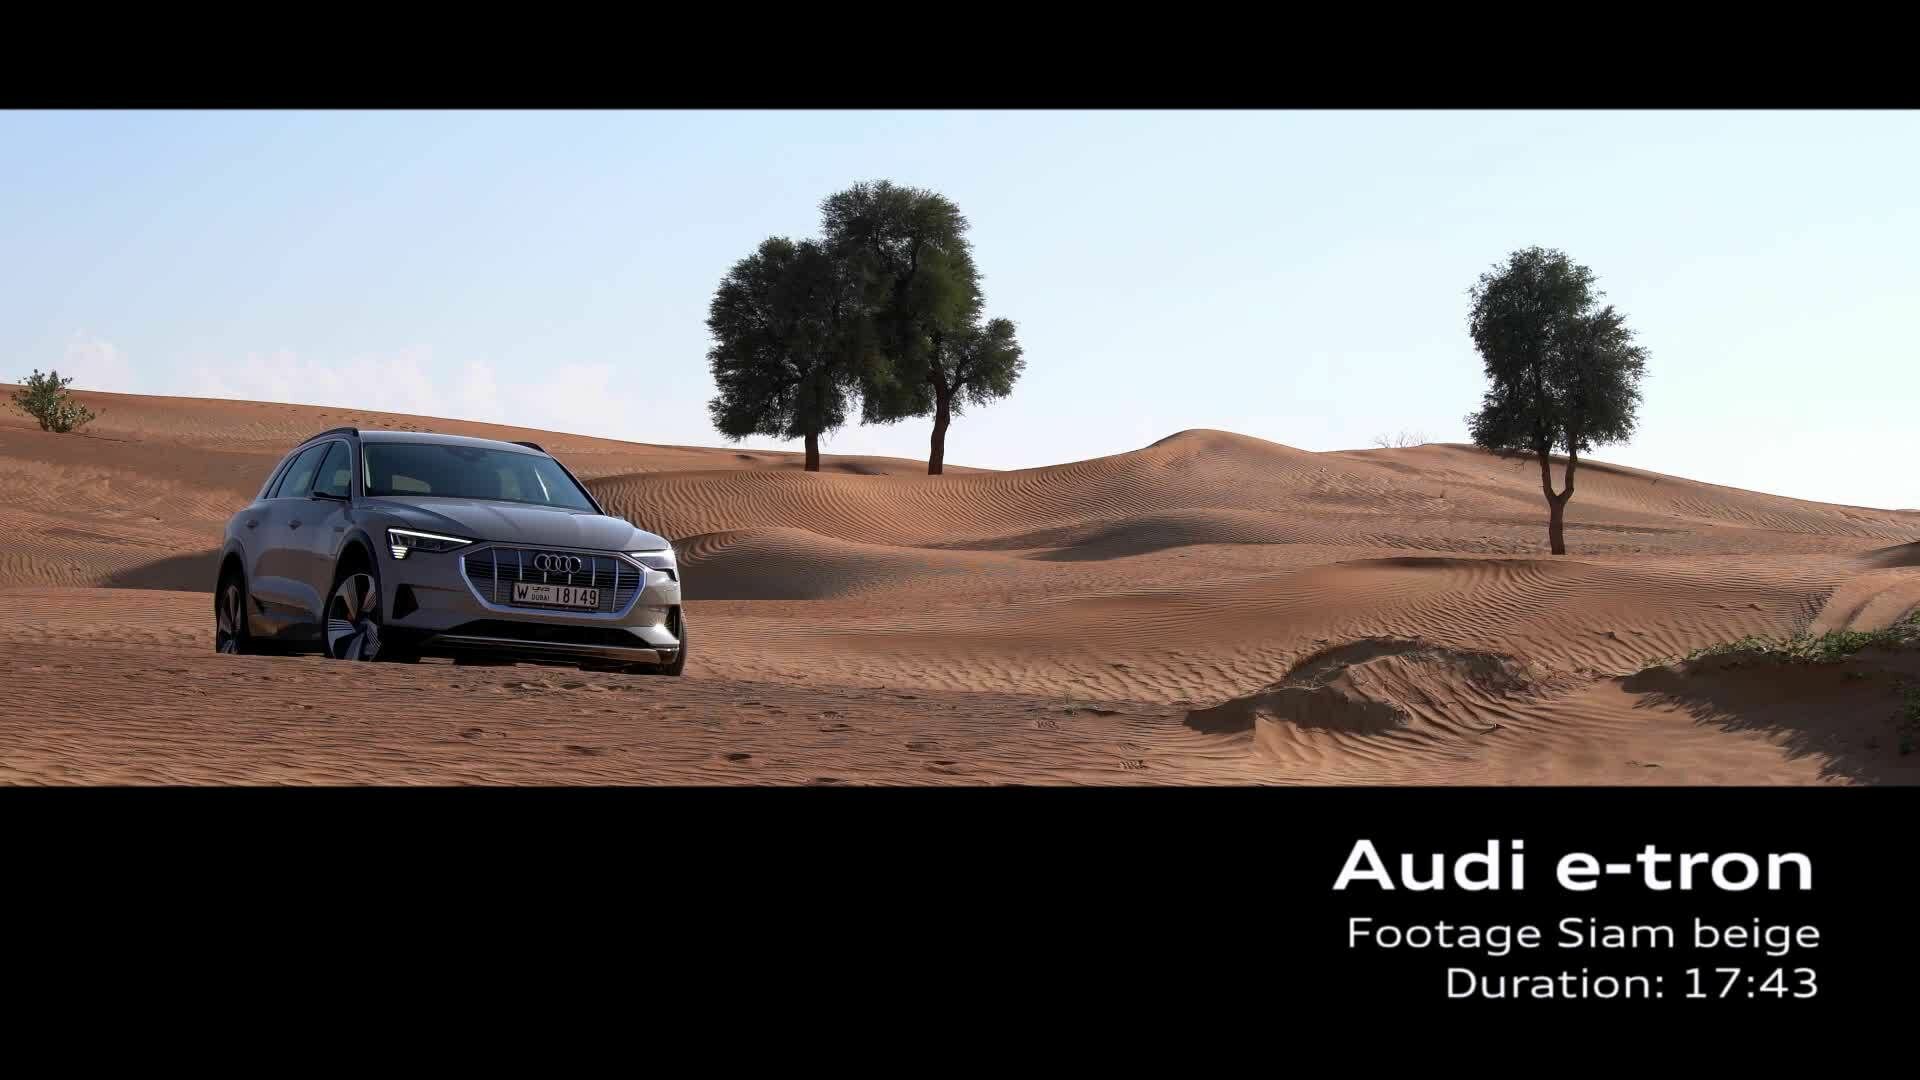 Audi e-tron Siam Beige (Footage)